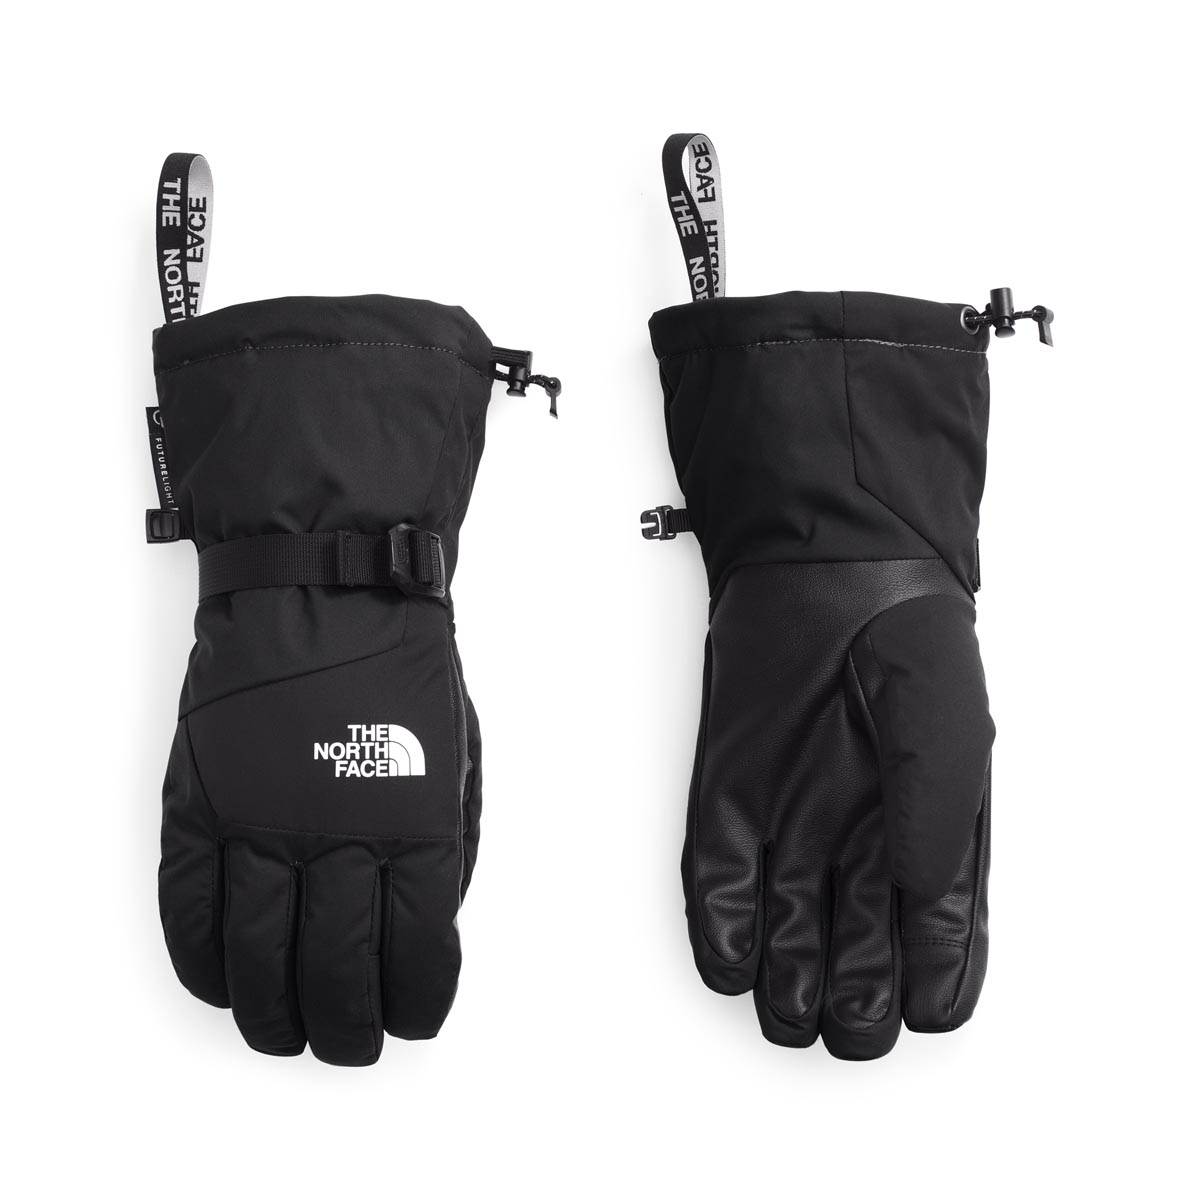 The North Face Men's Montana FUTURELIGHT Etip Glove